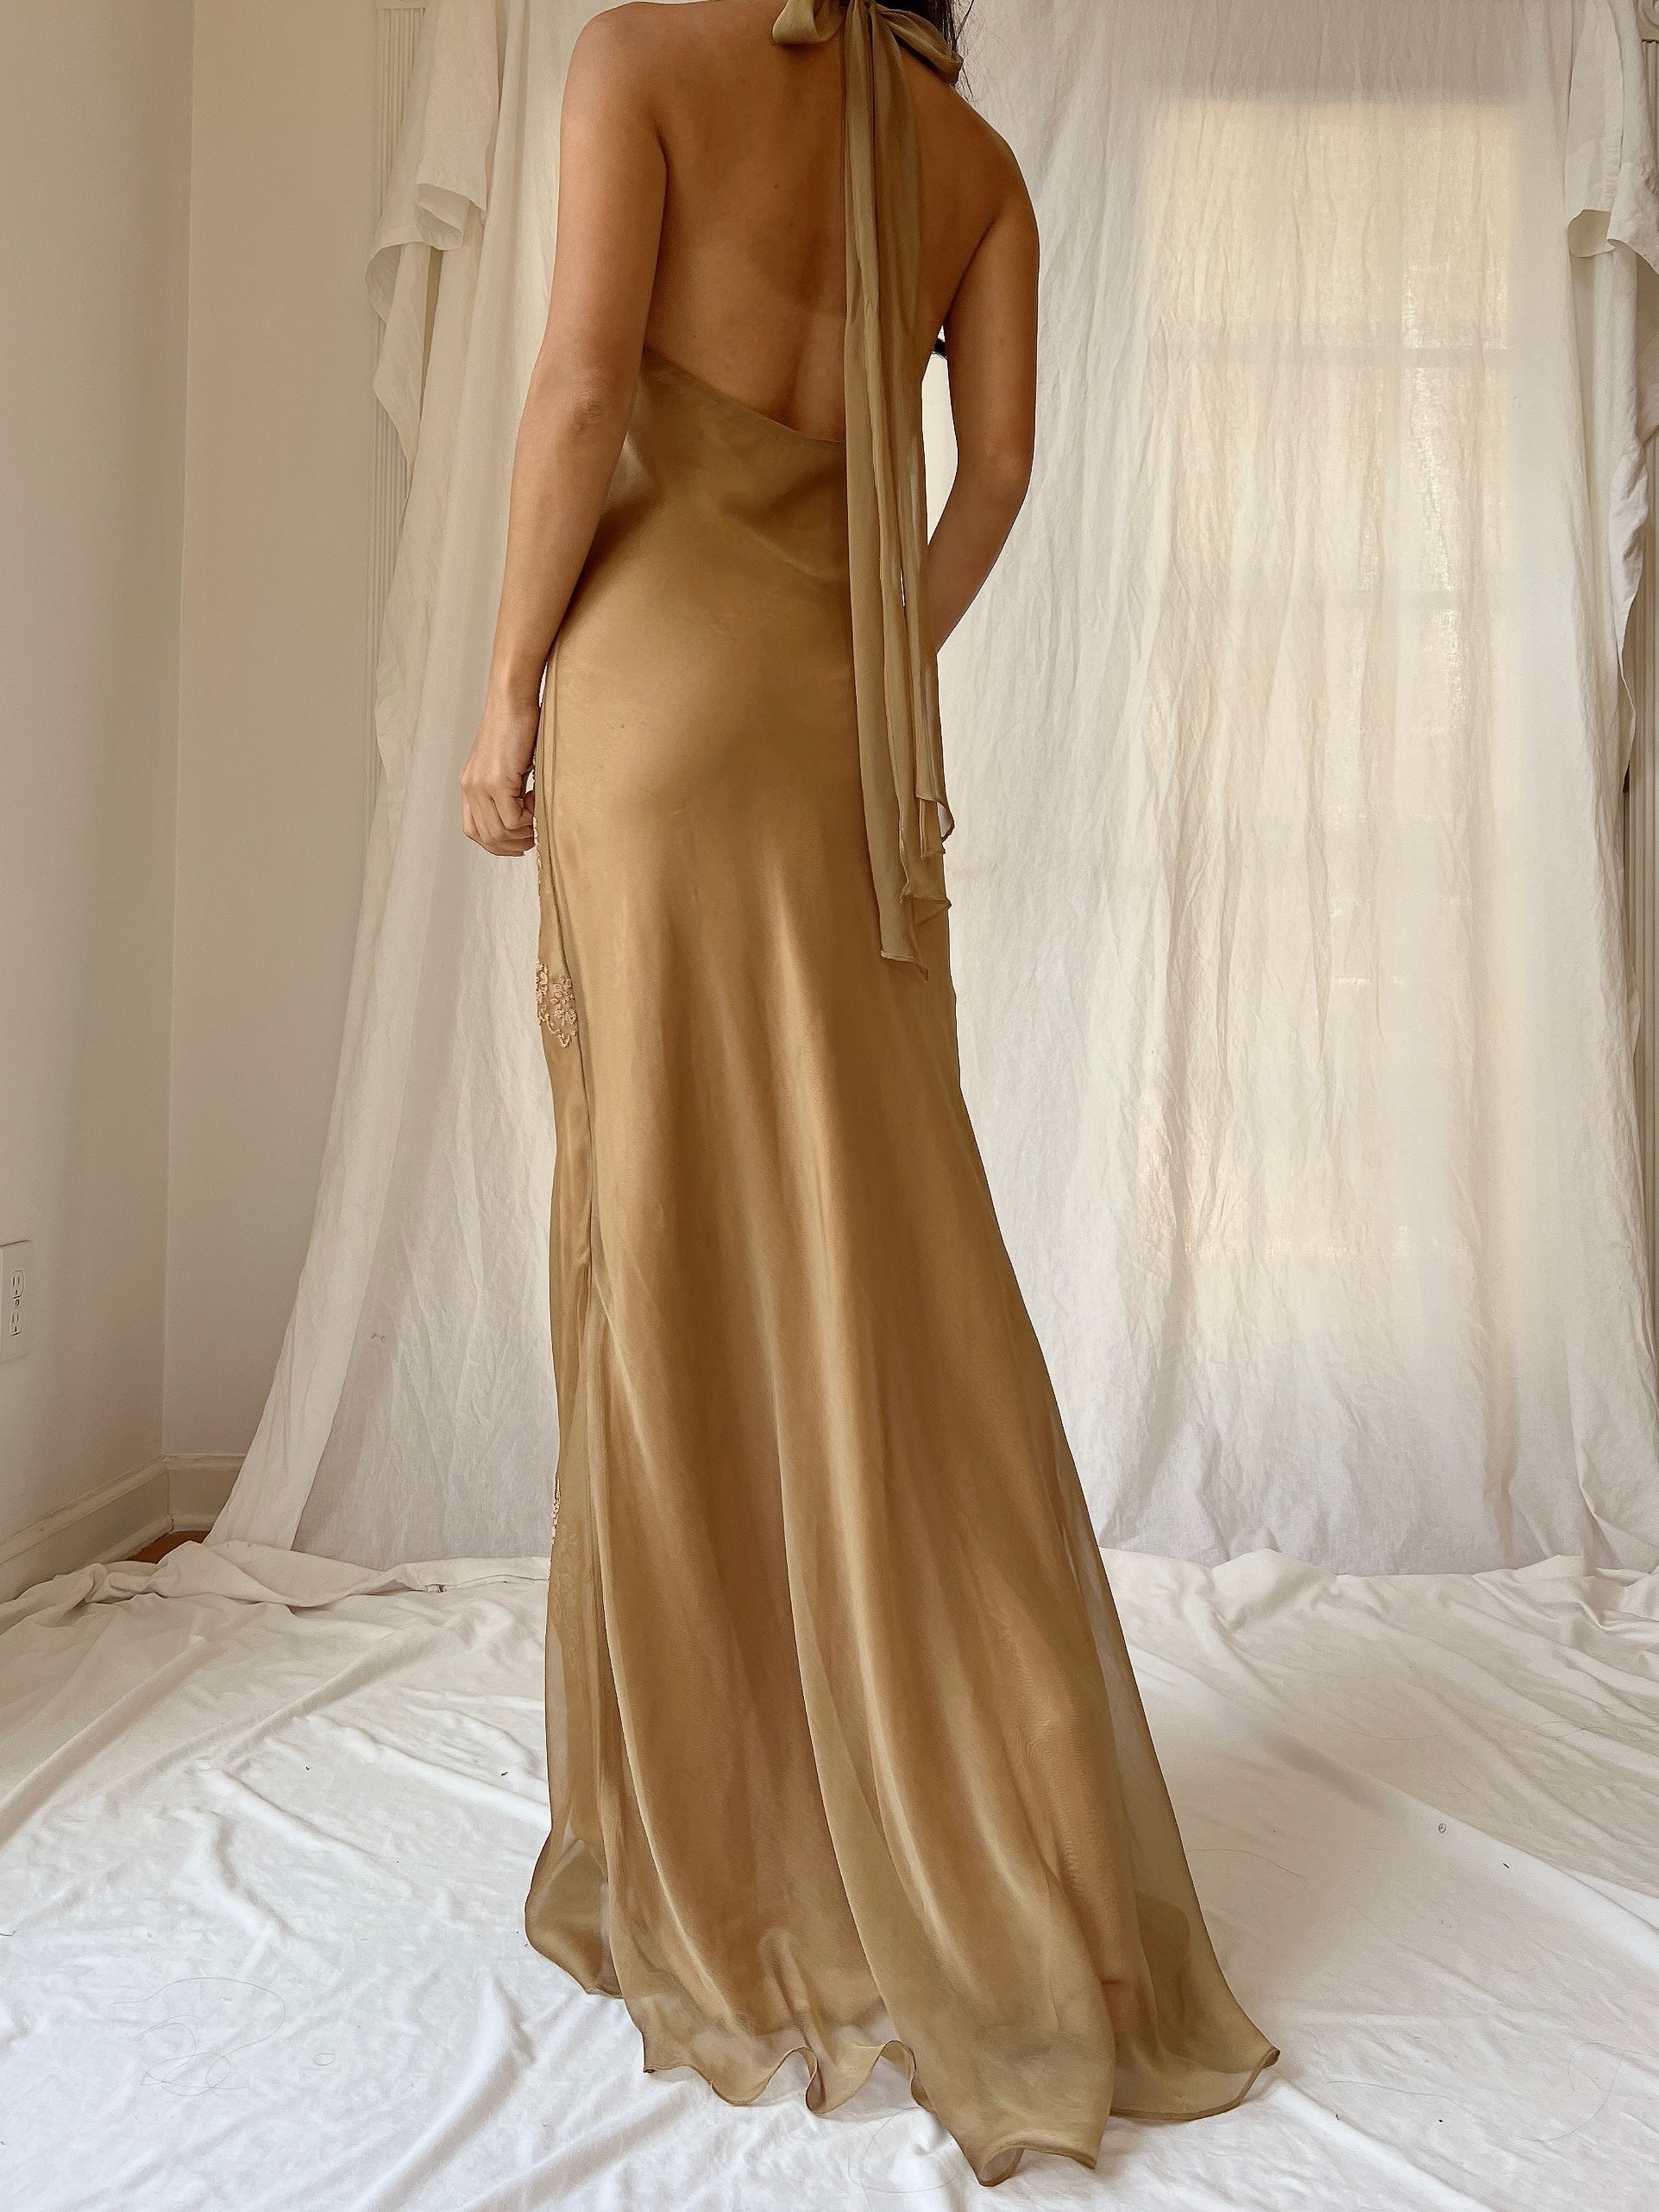 Vintage Gold Chiffon Dress - SM